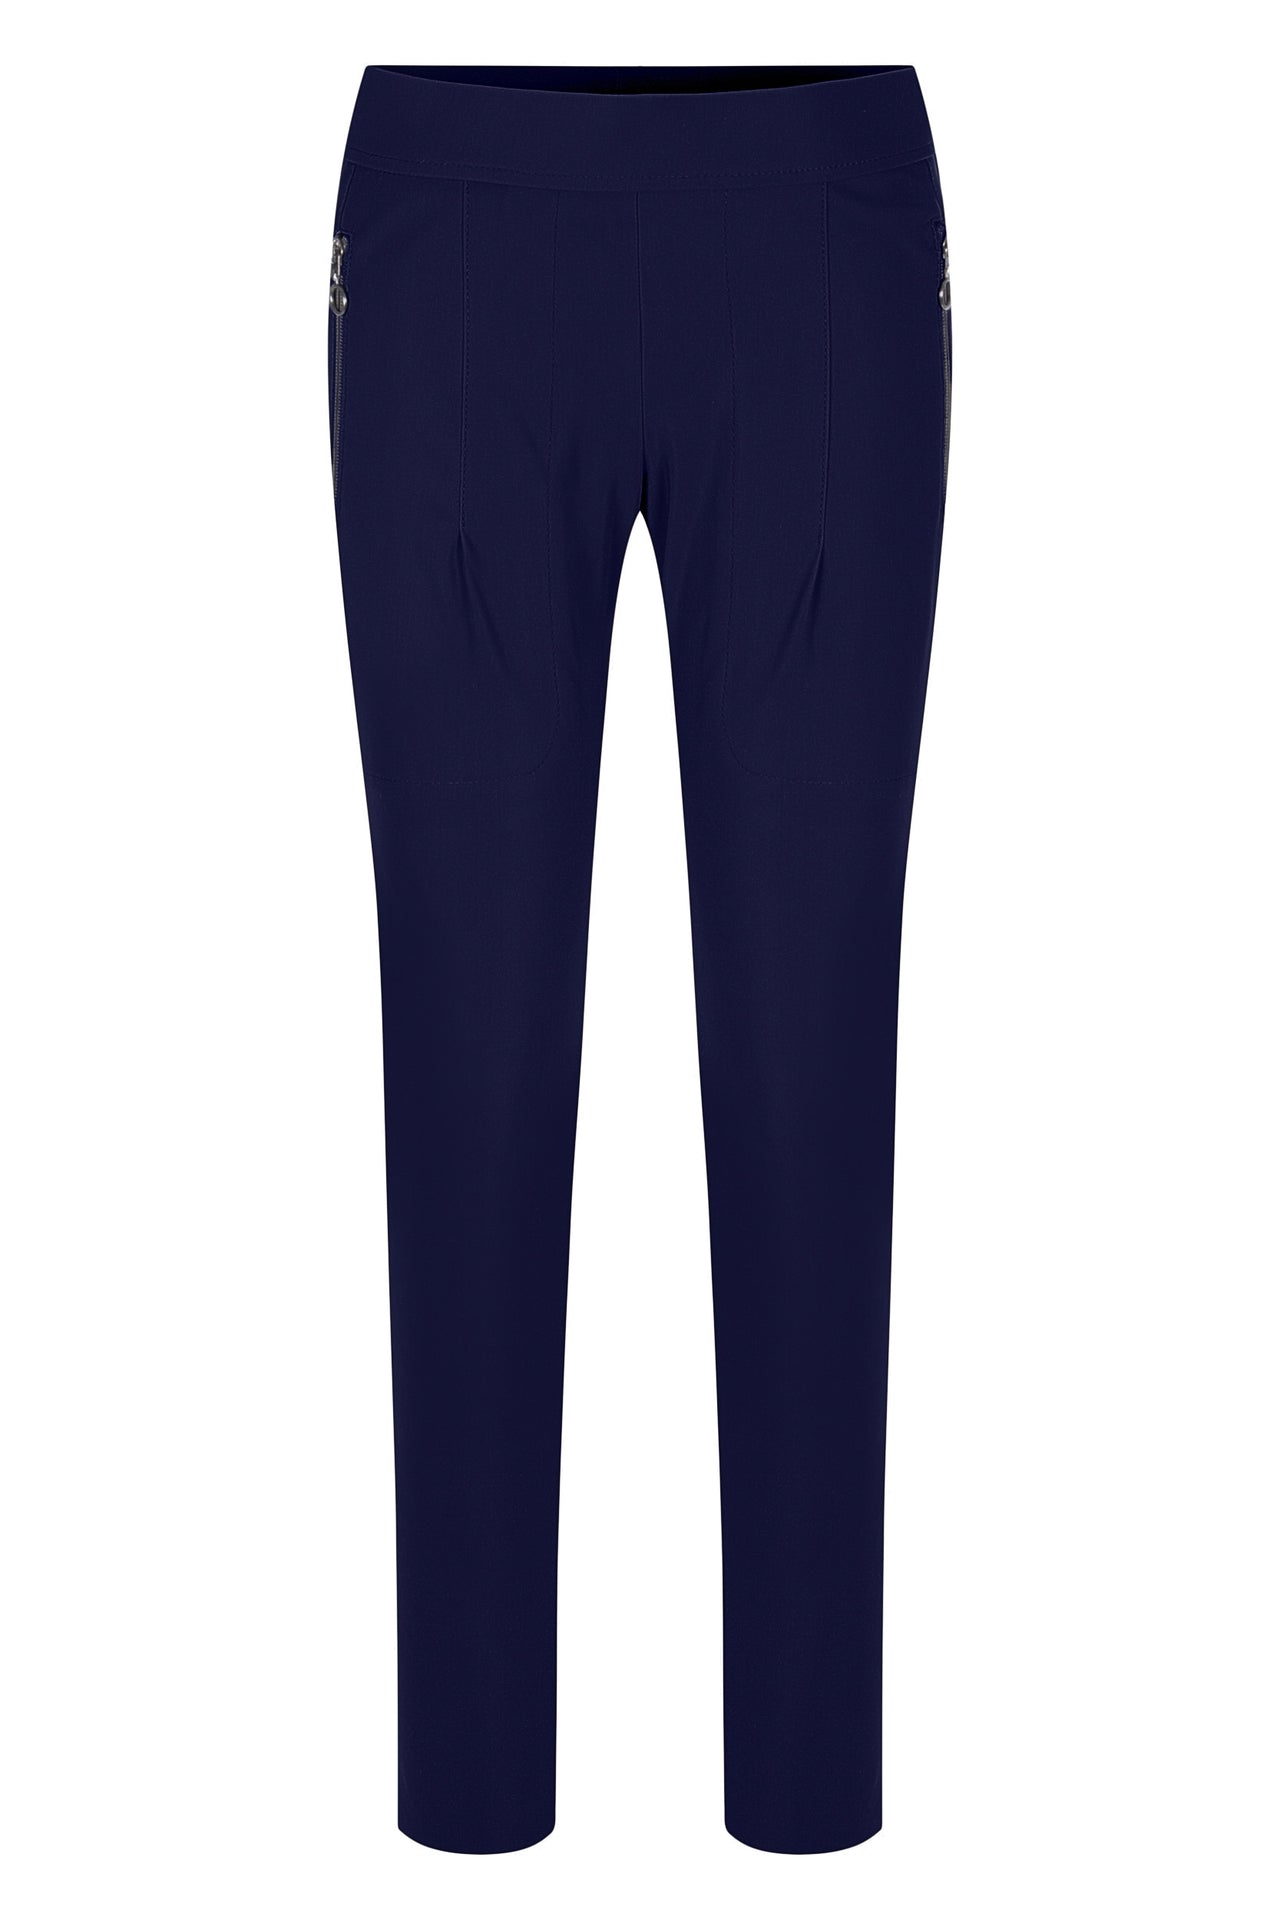 Kandra Ribbed Pant in Dark Blue-Pant-Raffaello Rossi-Debs Boutique